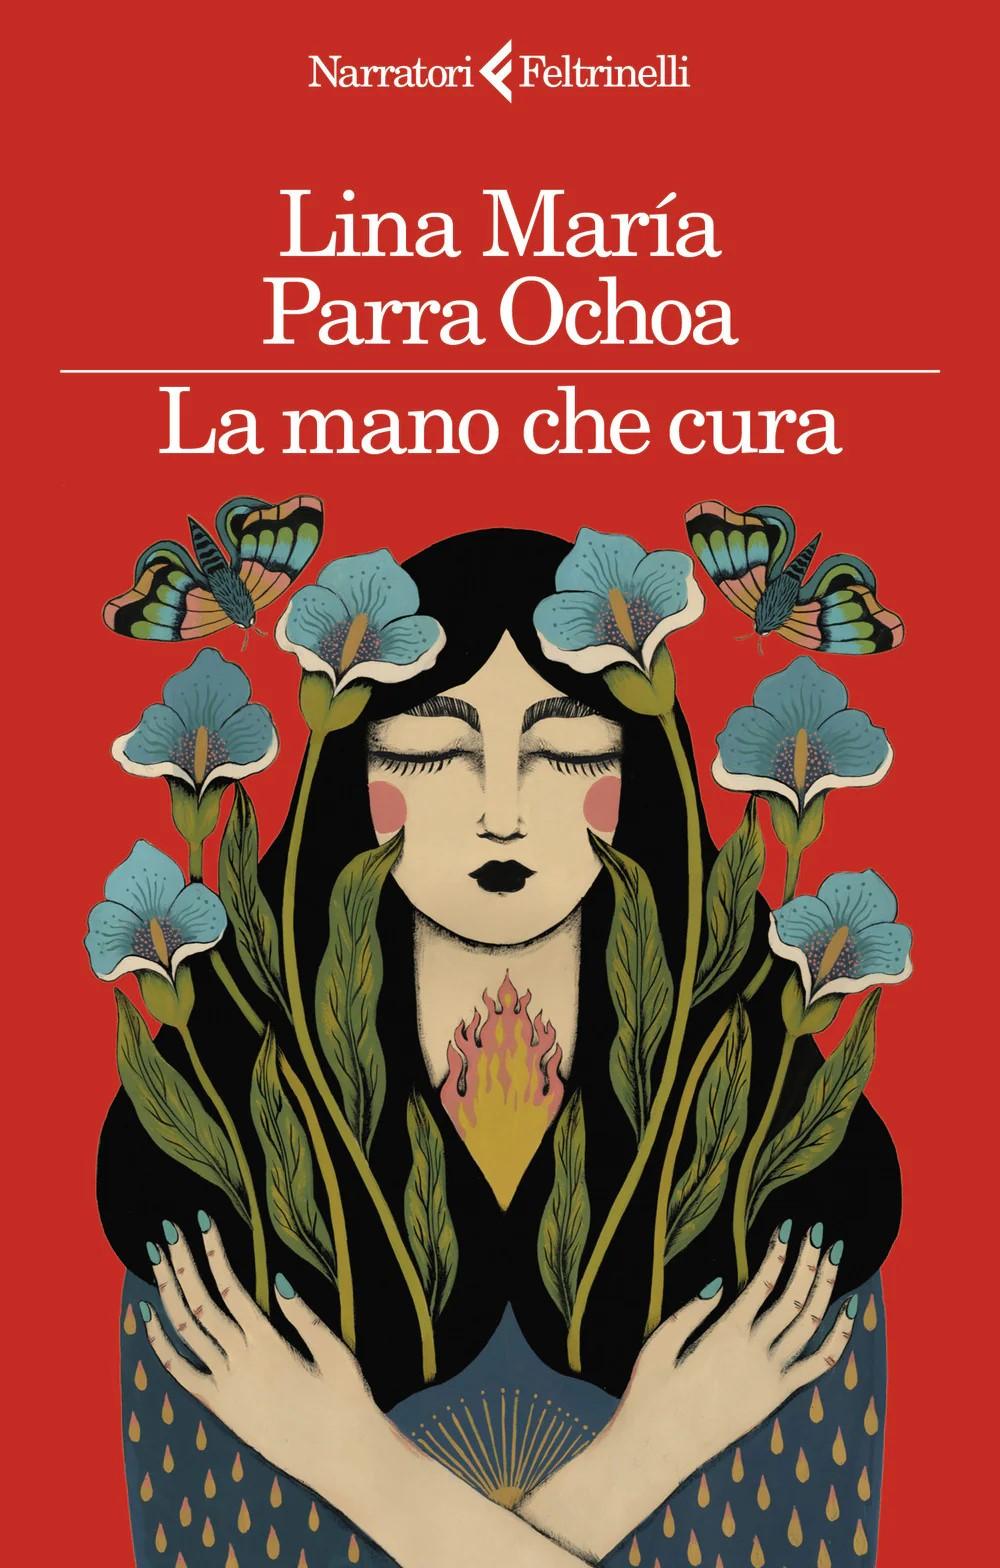 La mano che cura - Lina María Parra Ochoa, Feltrinelli